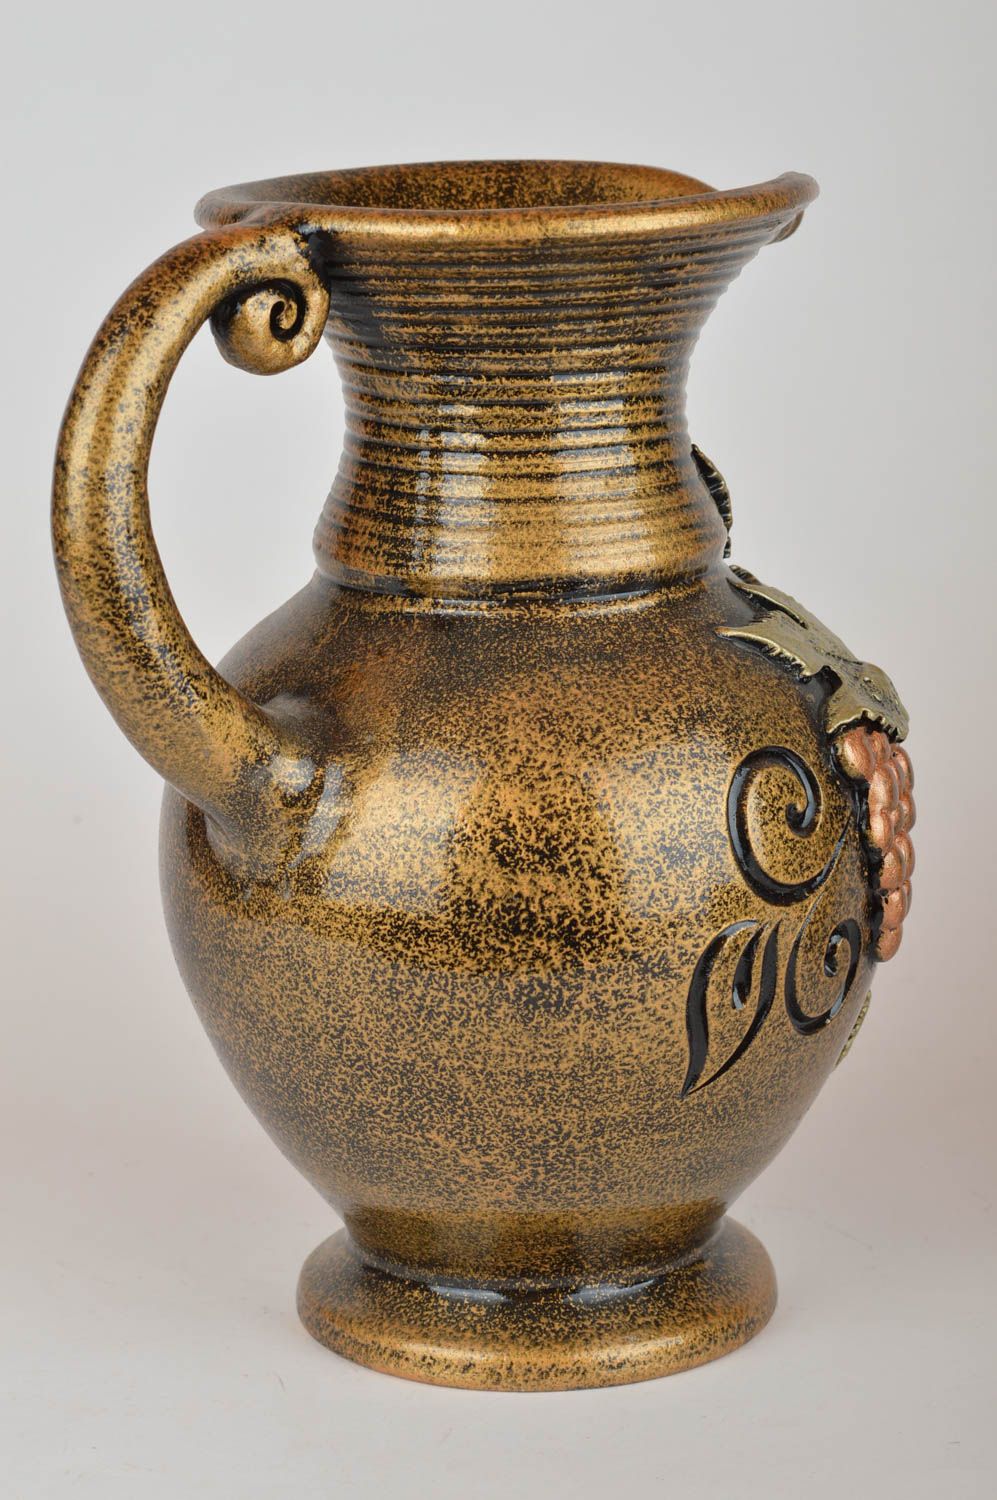 60 oz ceramic handmade wine pitcher with handle and molded grape design 2,9 lb photo 2